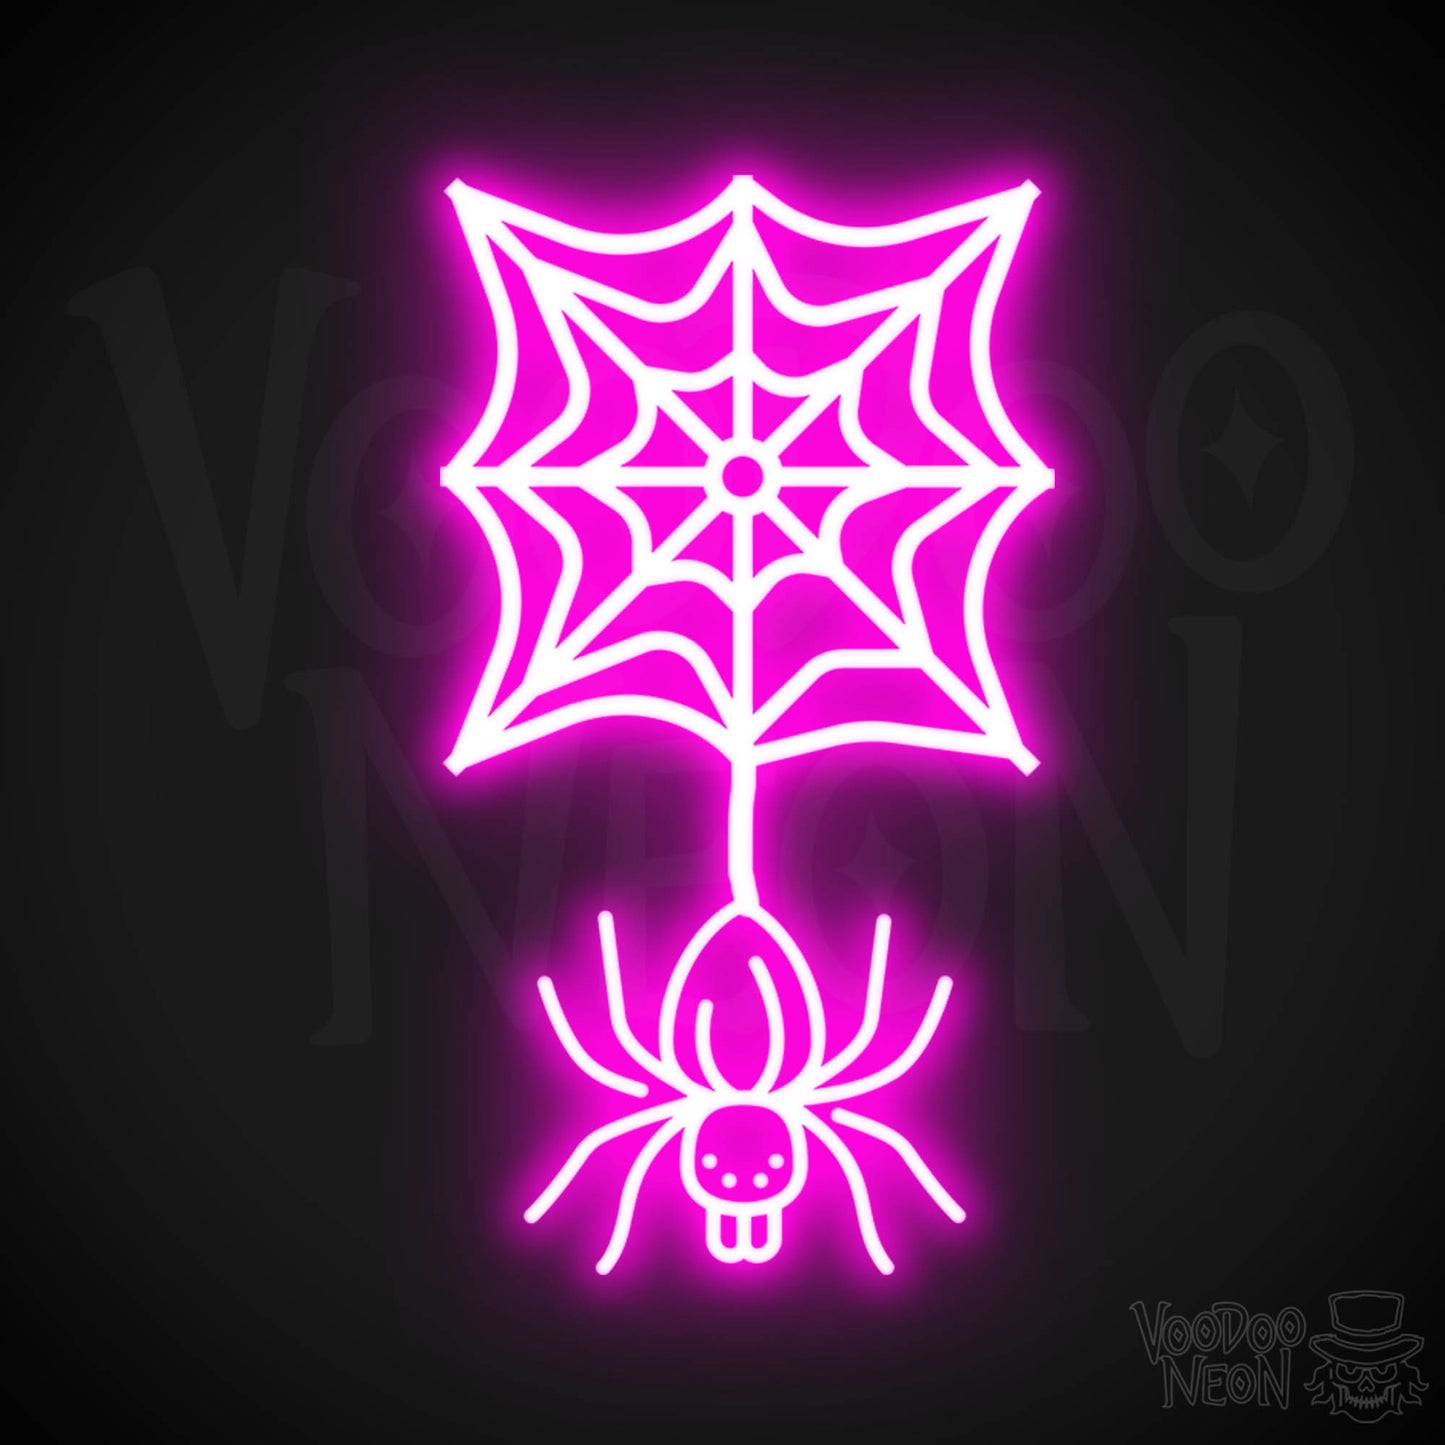 Neon Spider - Spider Neon Sign - Halloween LED Neon Spider - Color Pink